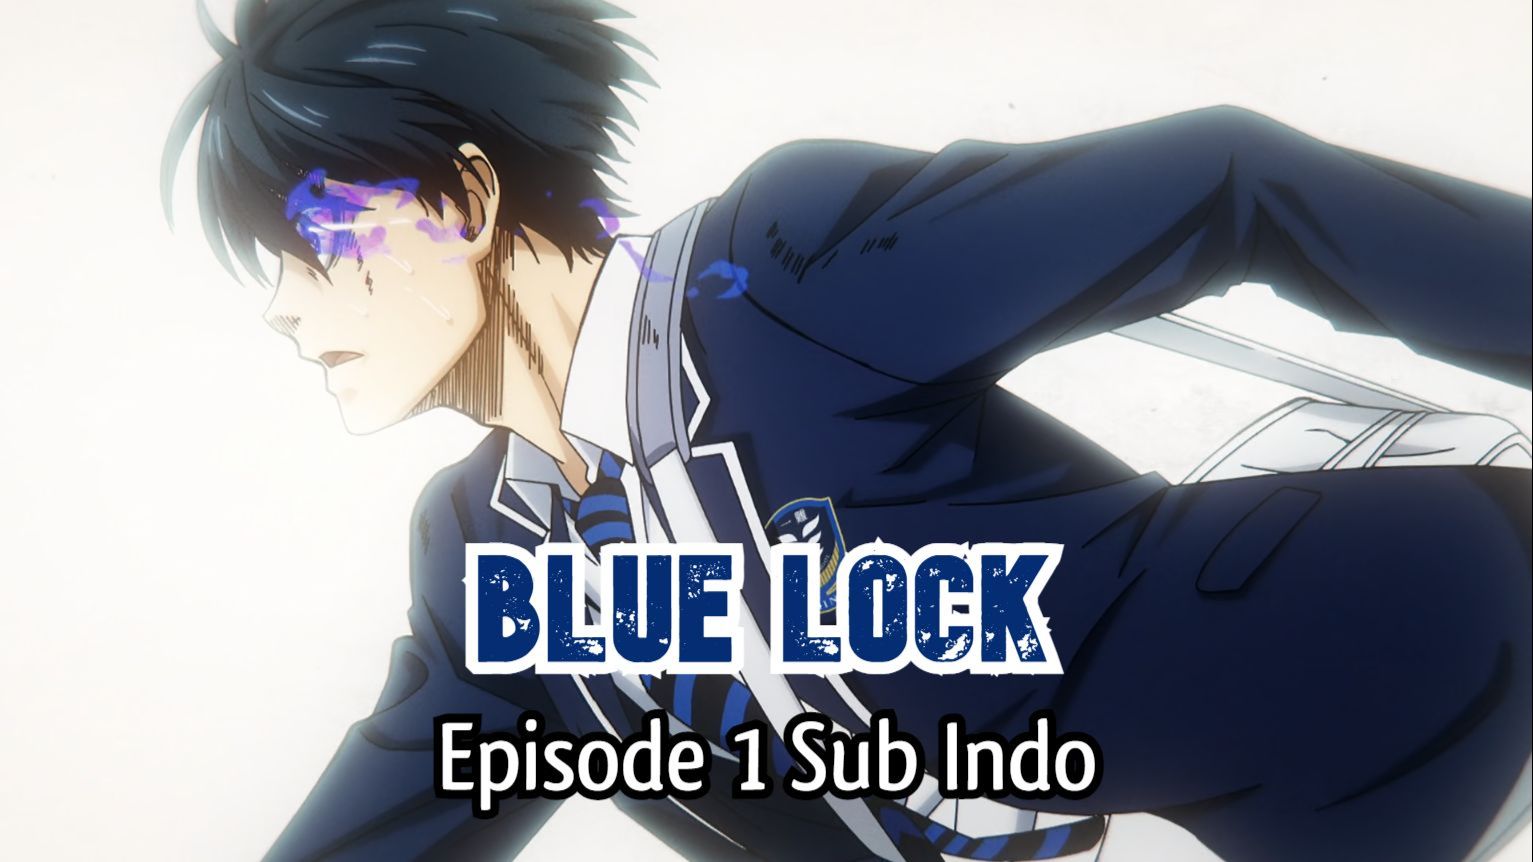 Episode 21  Blue Lock - BiliBili